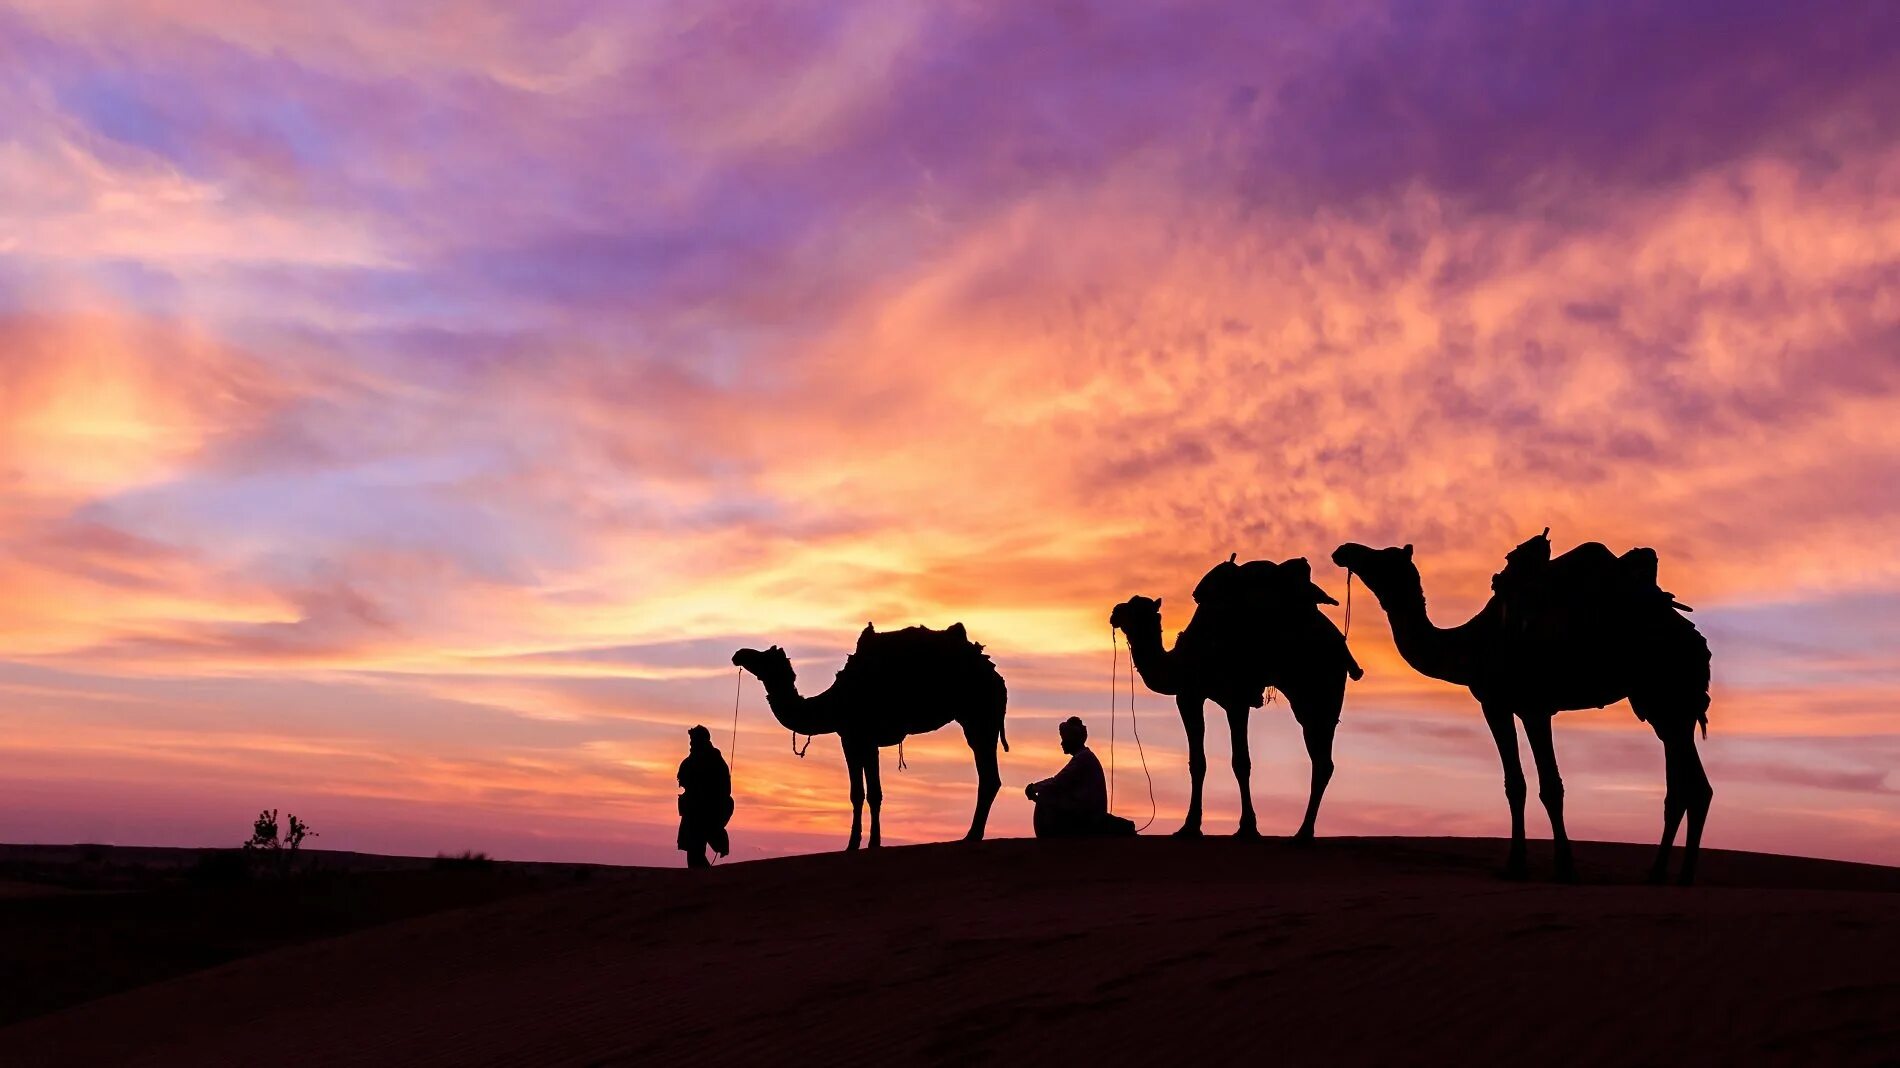 Залив караван. Караван с верблюдами в пустыне. Караван Аравийской пустыне ОАЭ. Арабы с караваном в пустыне. Караван верблюдов в пустыне.